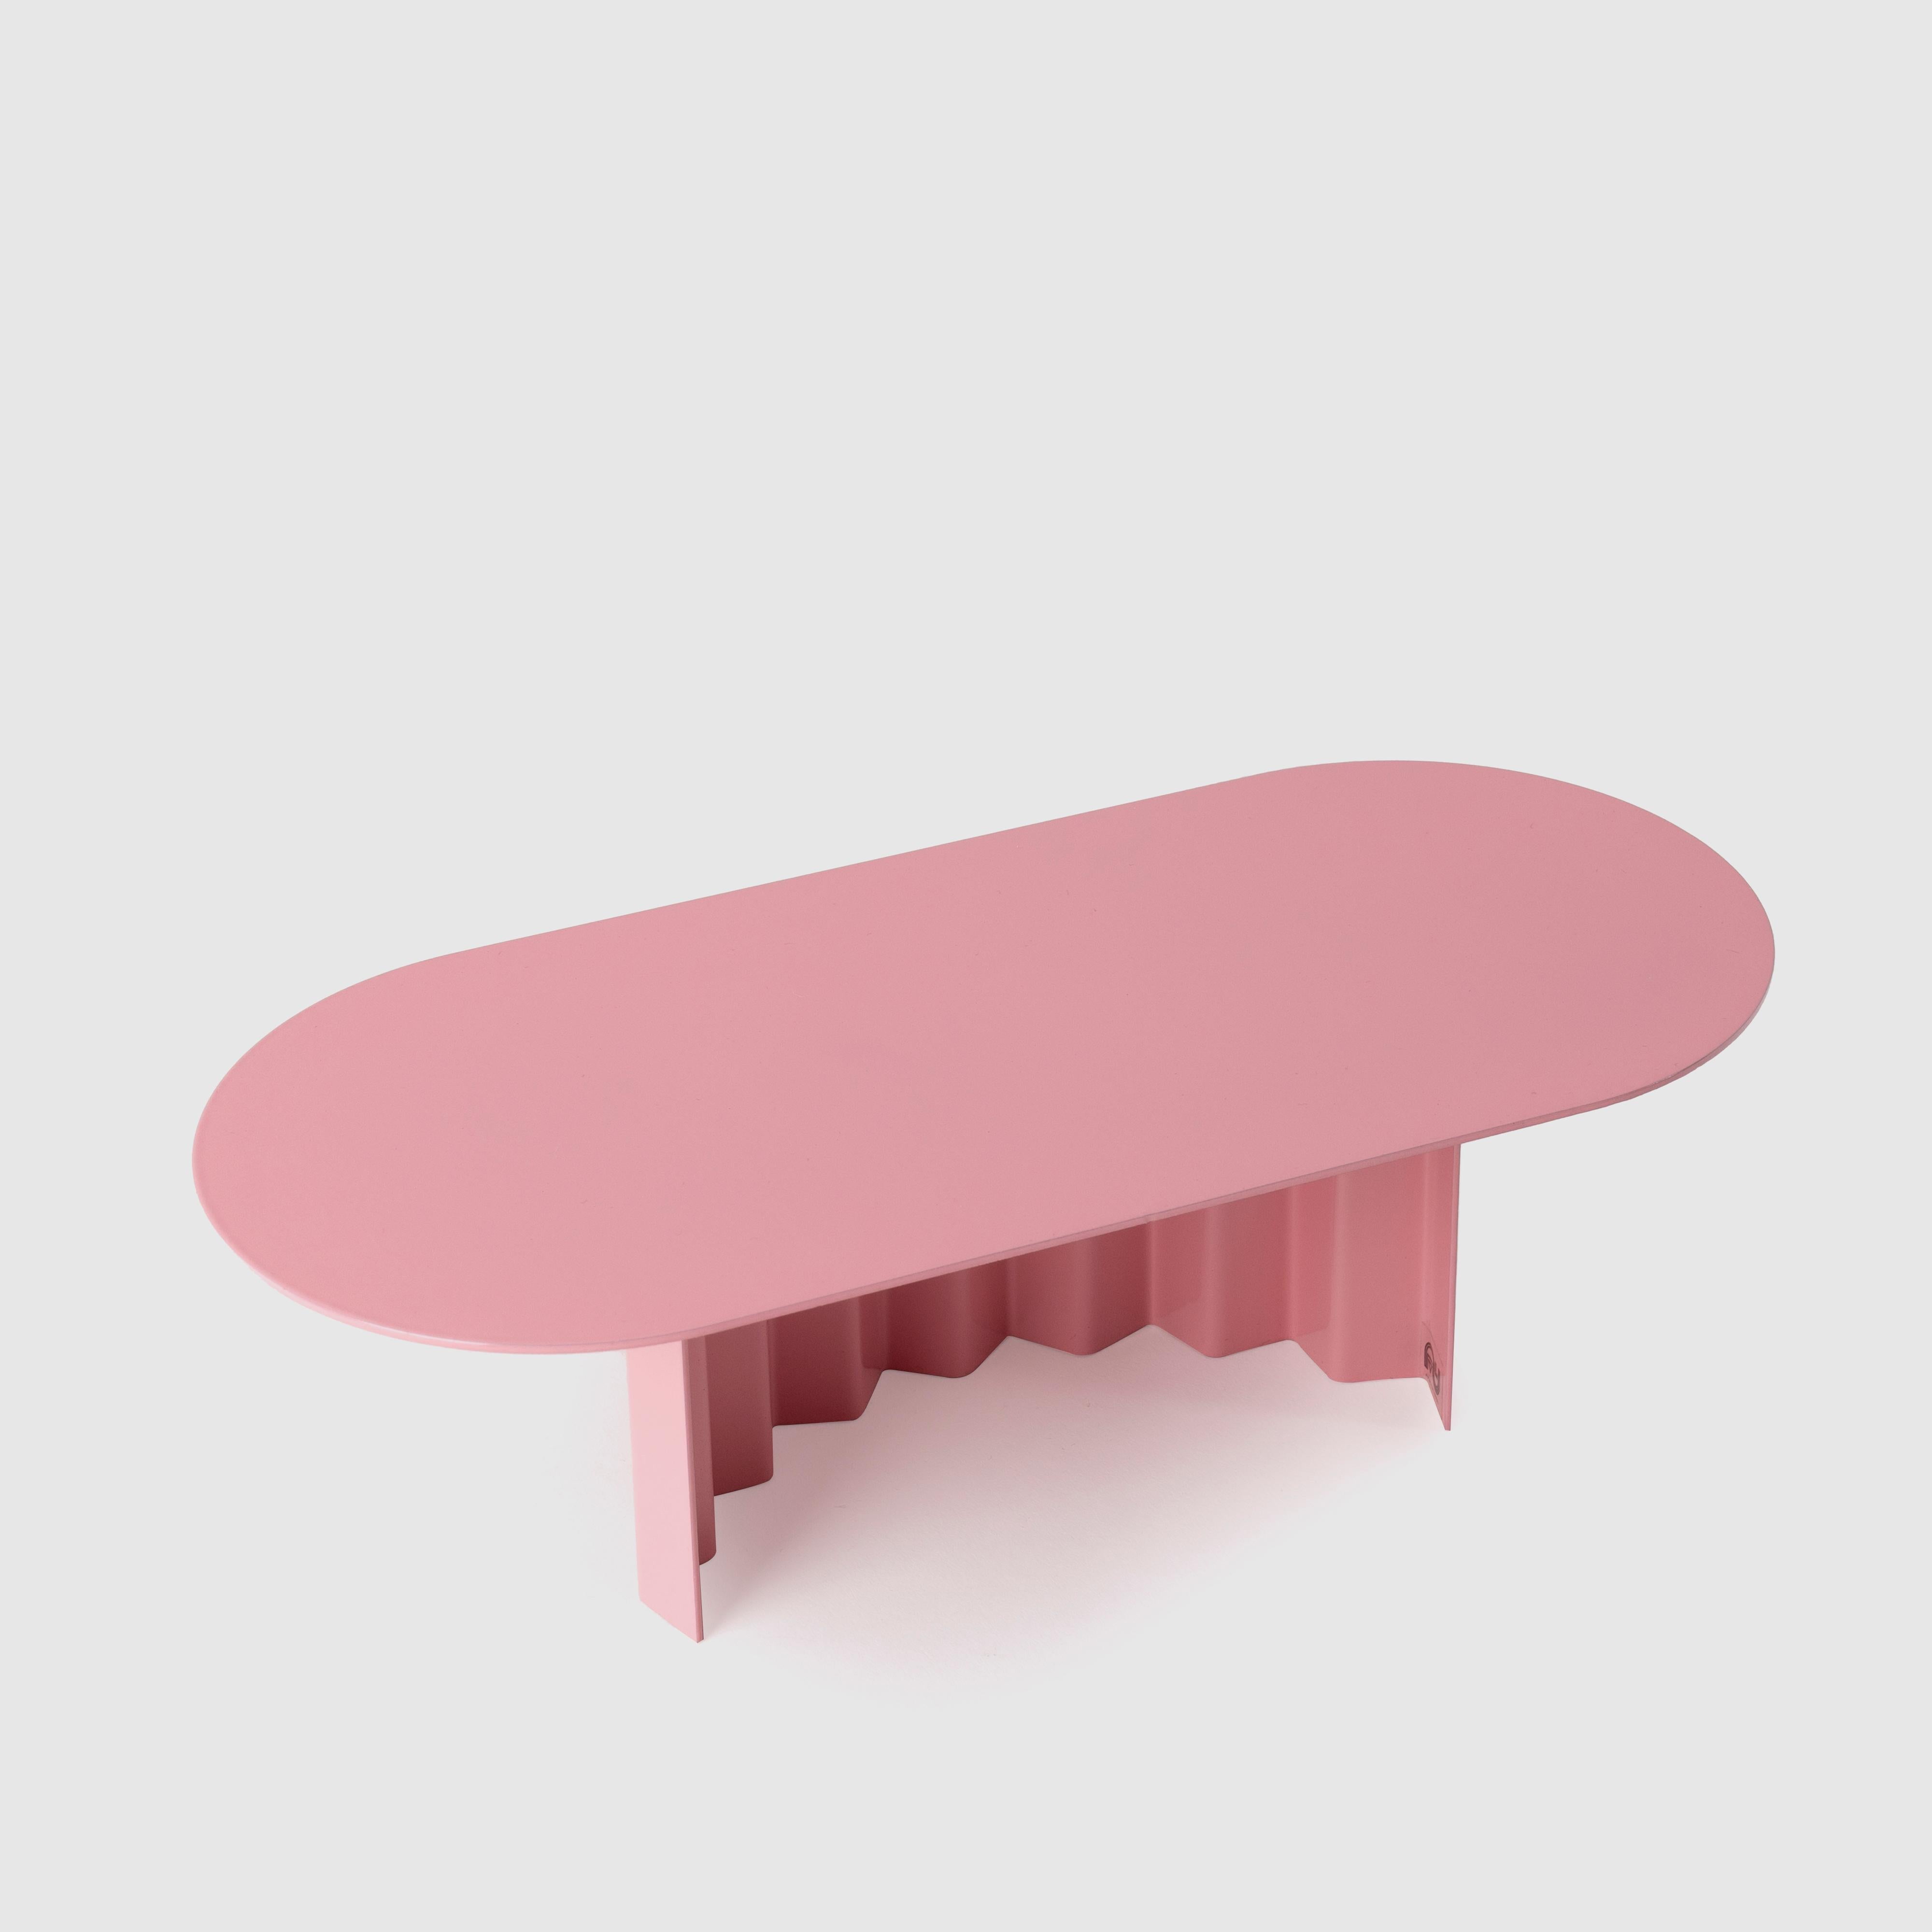 Turkish Contemporary Modern, Esnaf Pink Party Platter For Sale